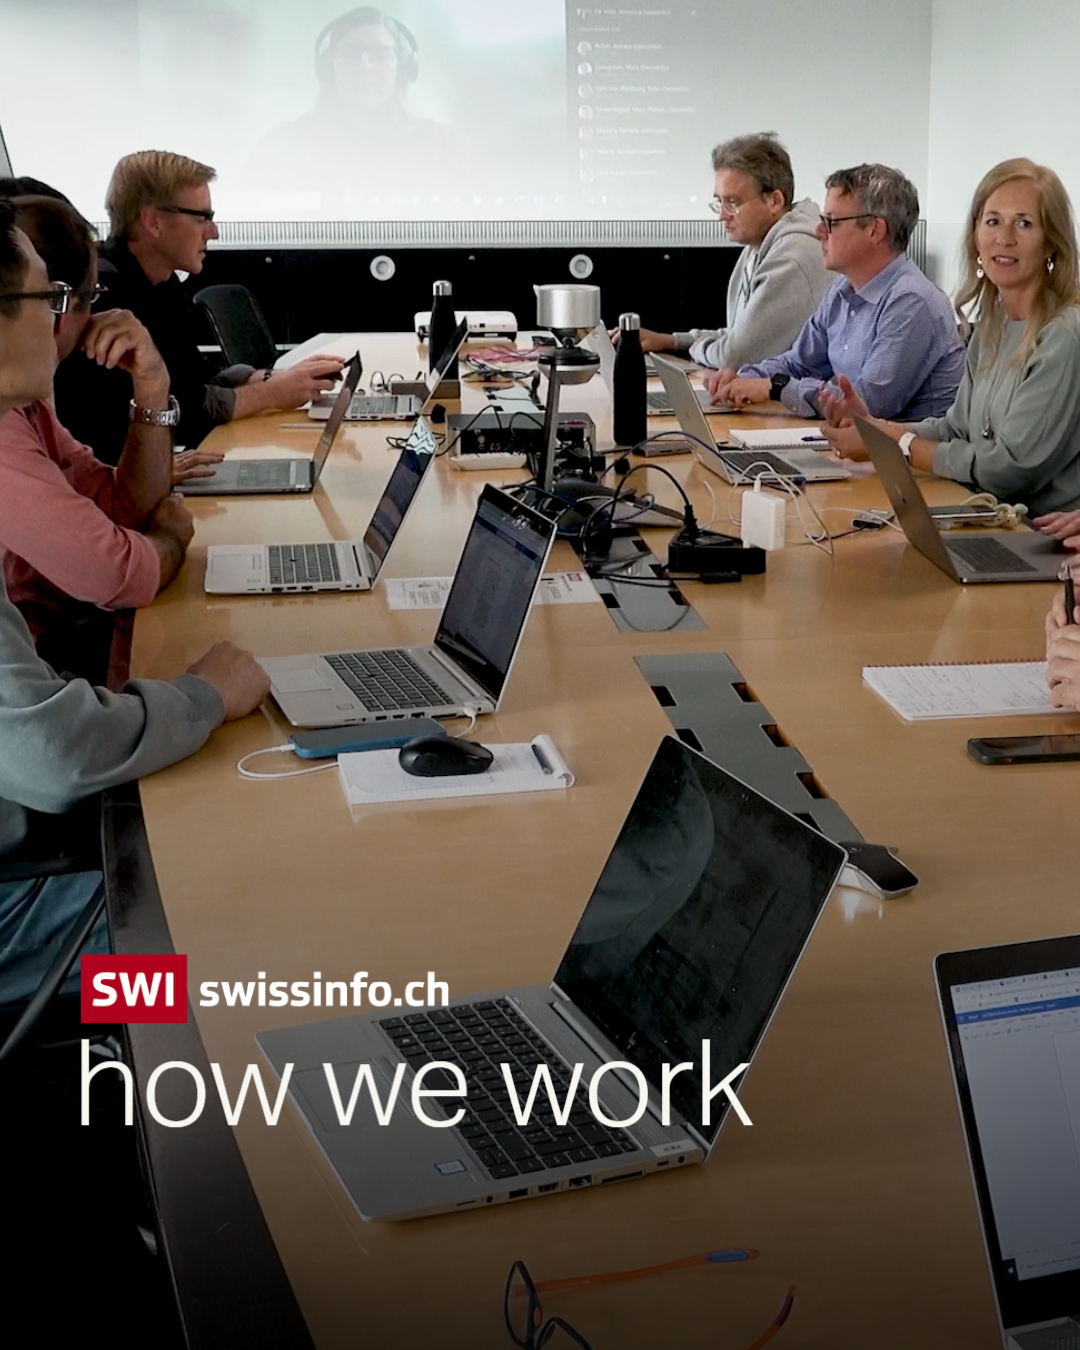 SWI swissinfo.ch team meeting